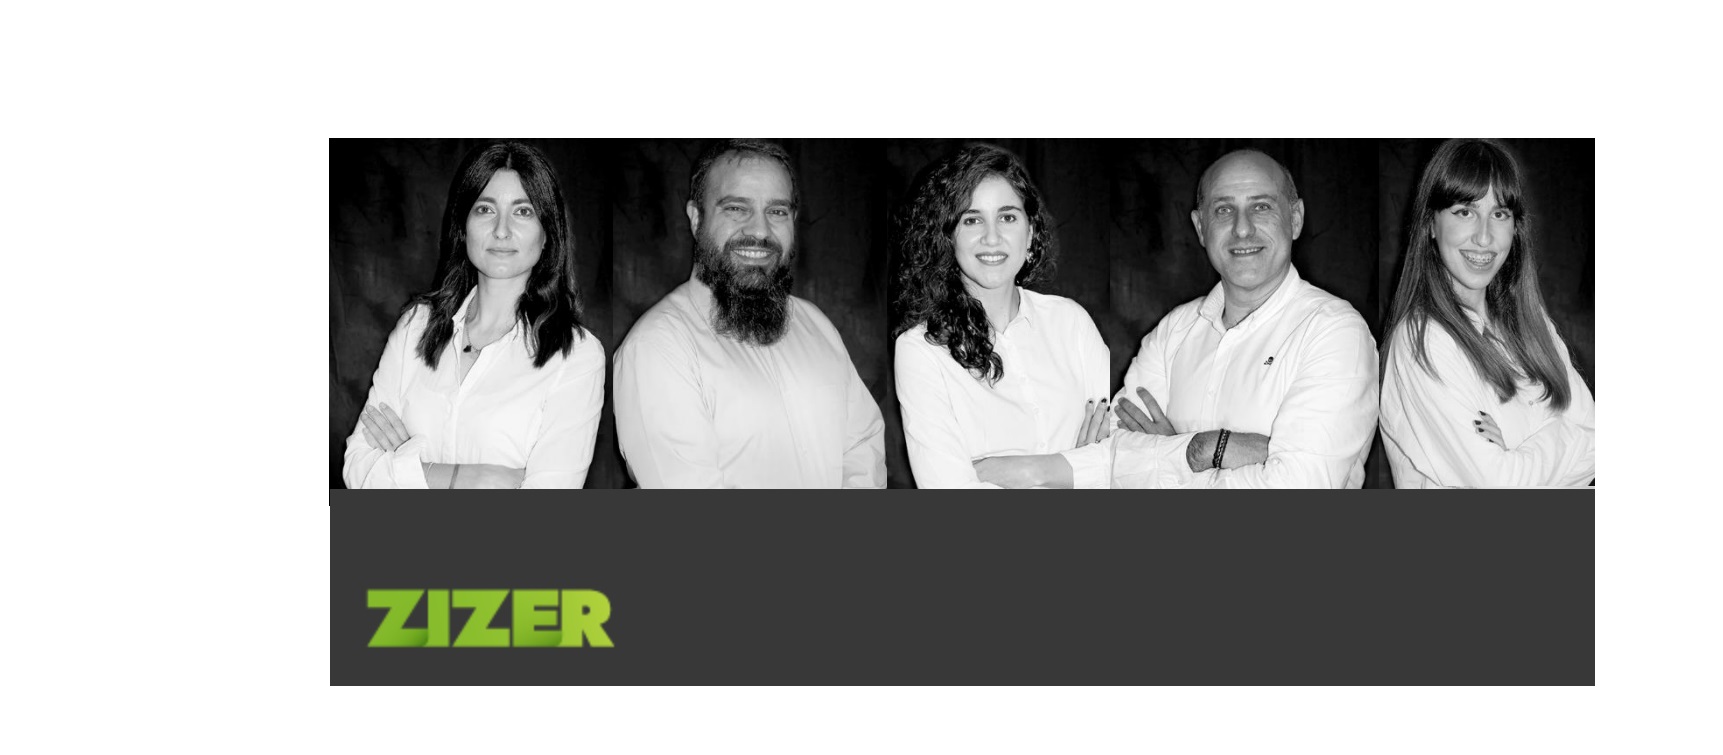 ZIZER,Grupo IKI, Eunice Hidalgo, Víctor Barrio, Andrea Cuadrado, Javier Suárez ,Elena López,programapublicidad